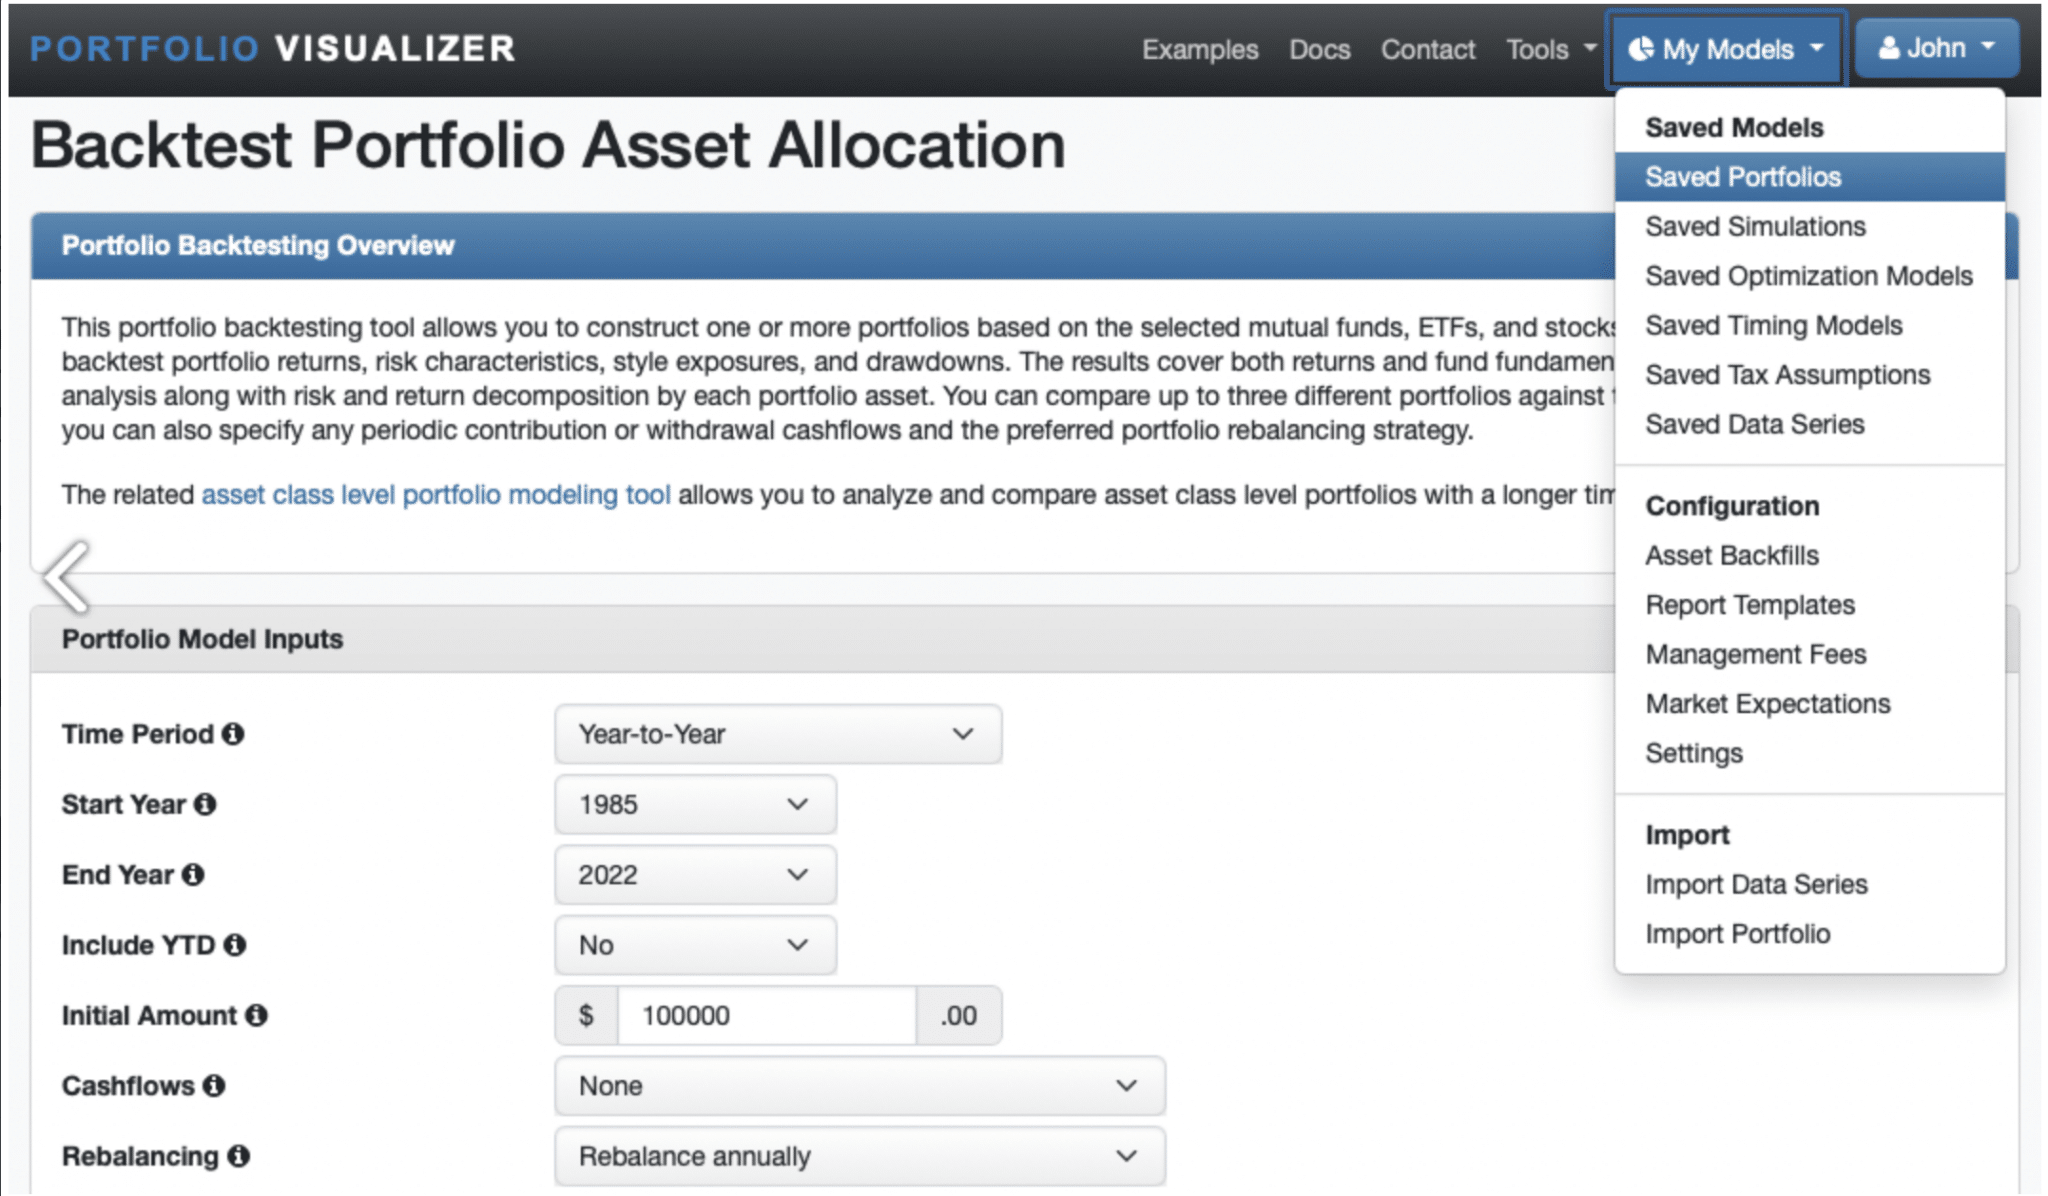 Portfolio Visualizer Backtest Portfolio Asset Allocation